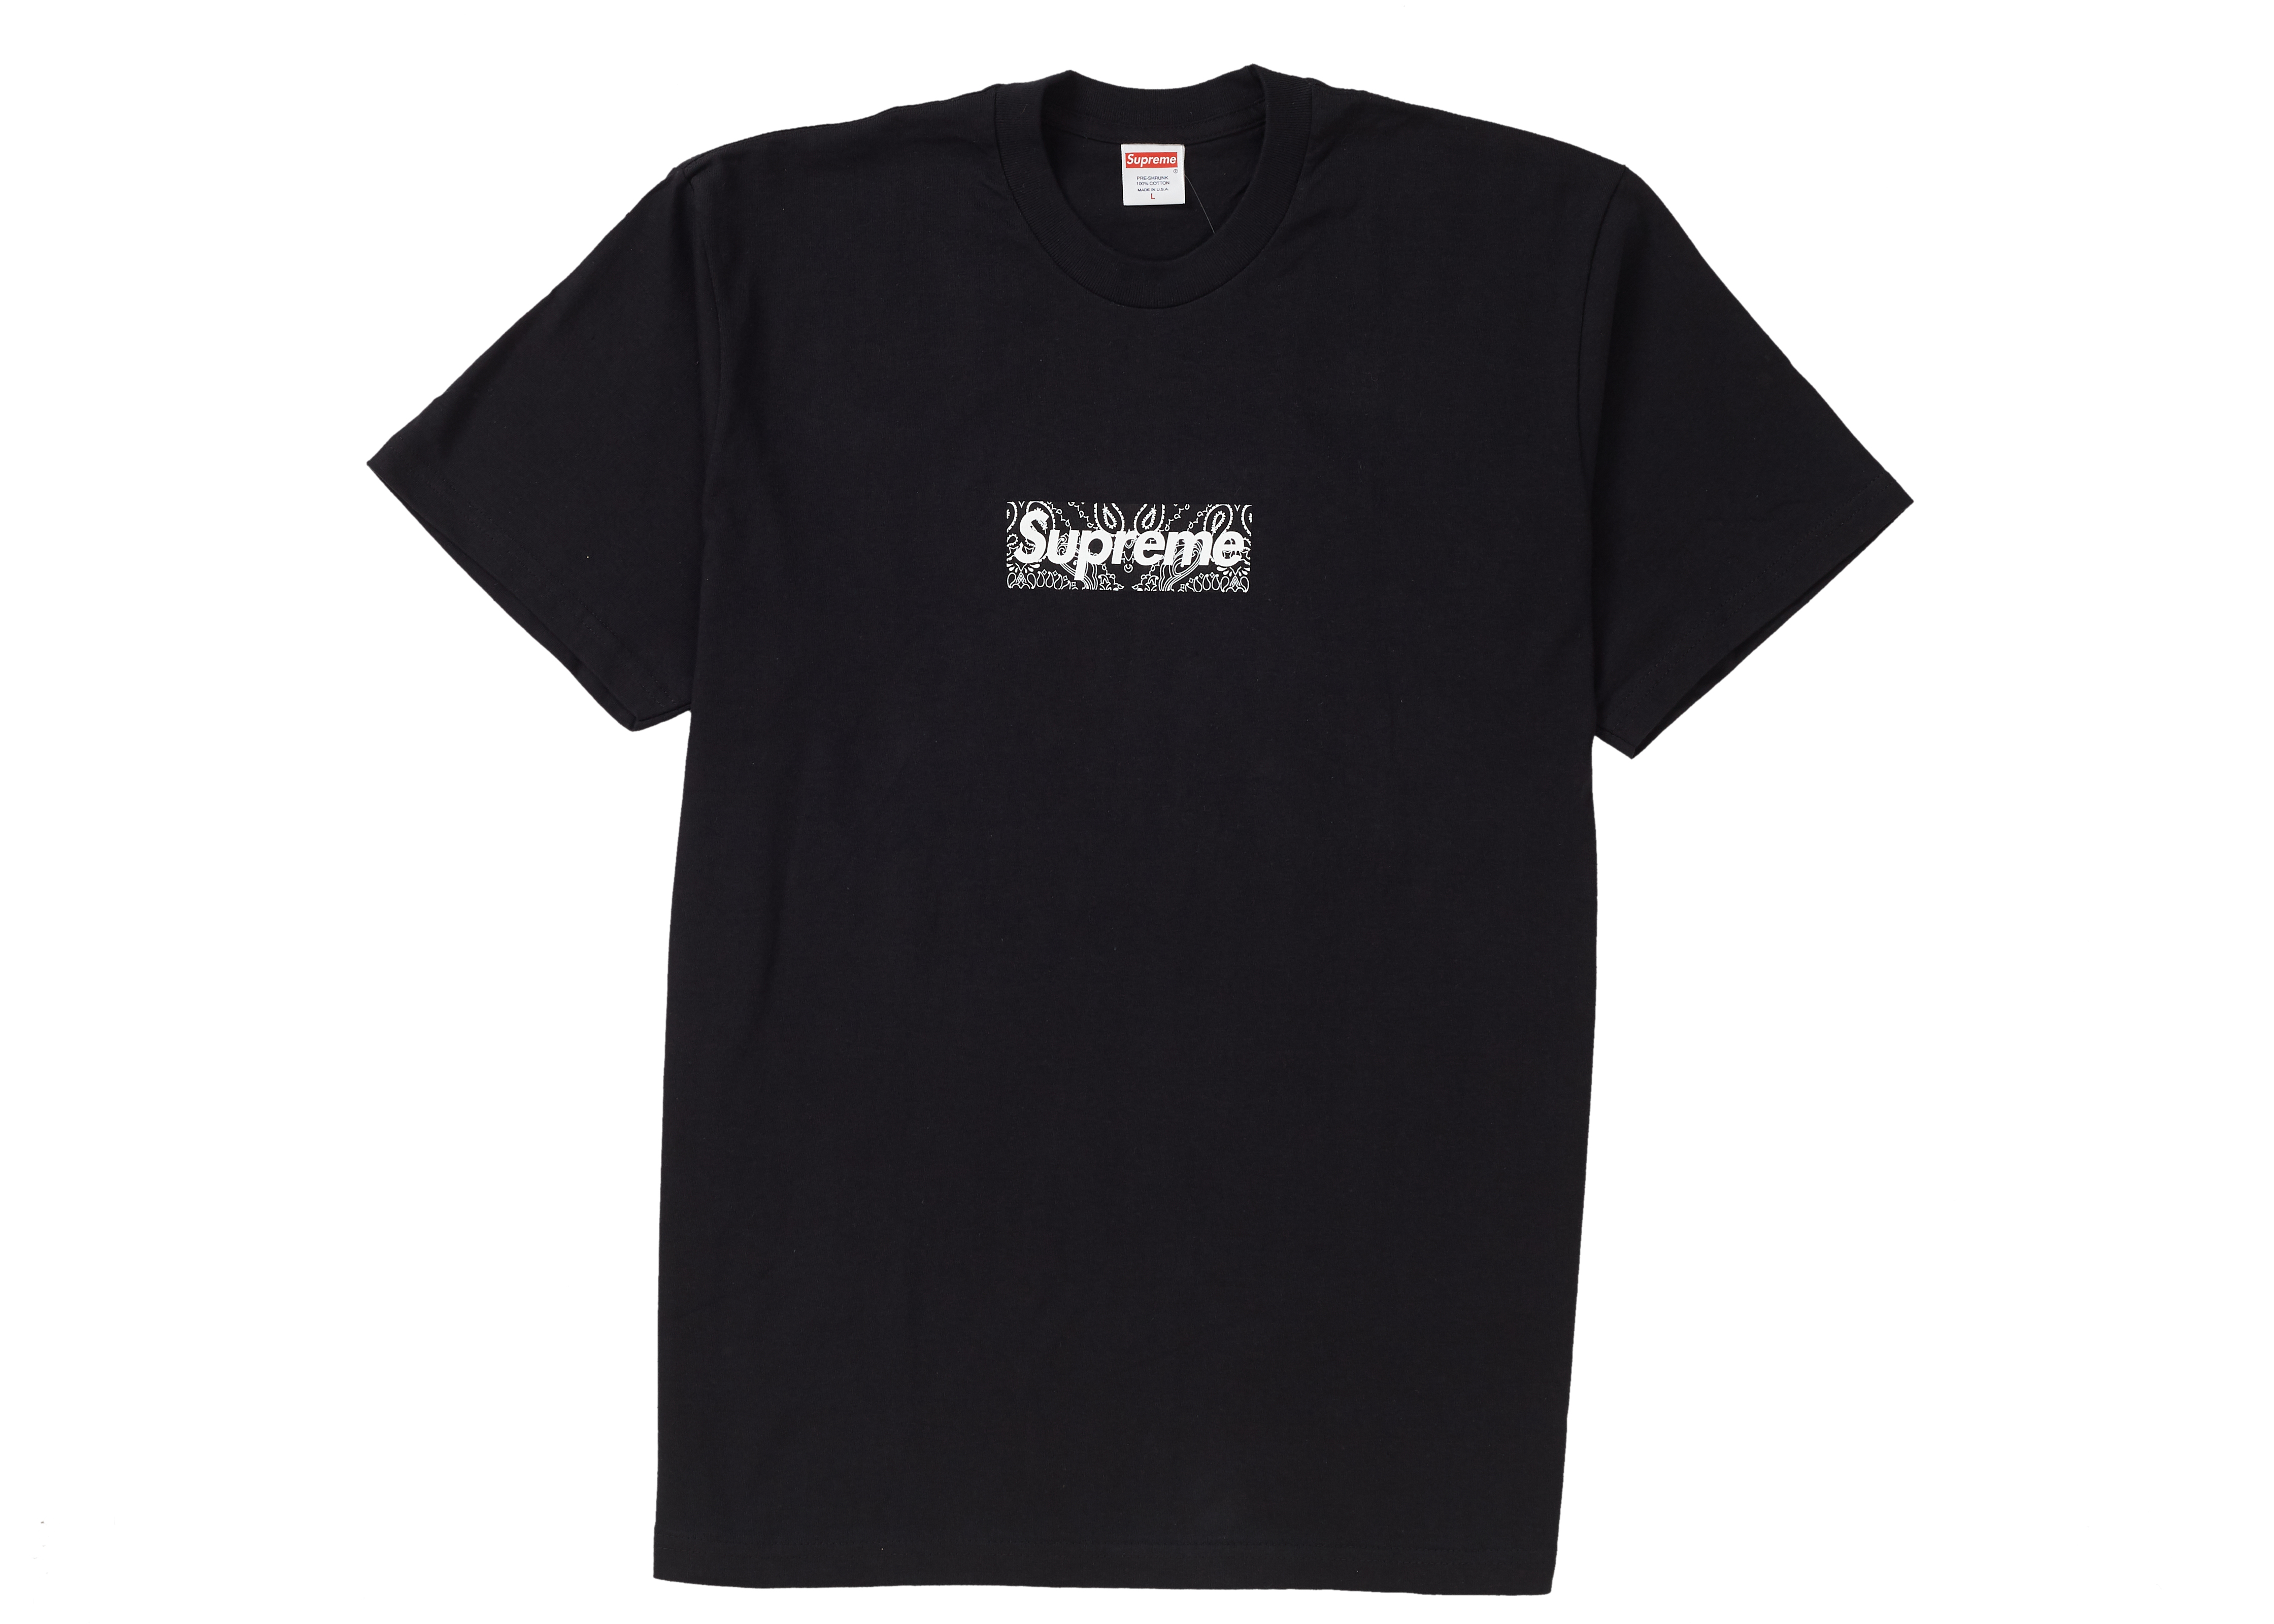 Supreme Box Logo T Shirt Stockx on Sale, 55% OFF | www.emanagreen.com